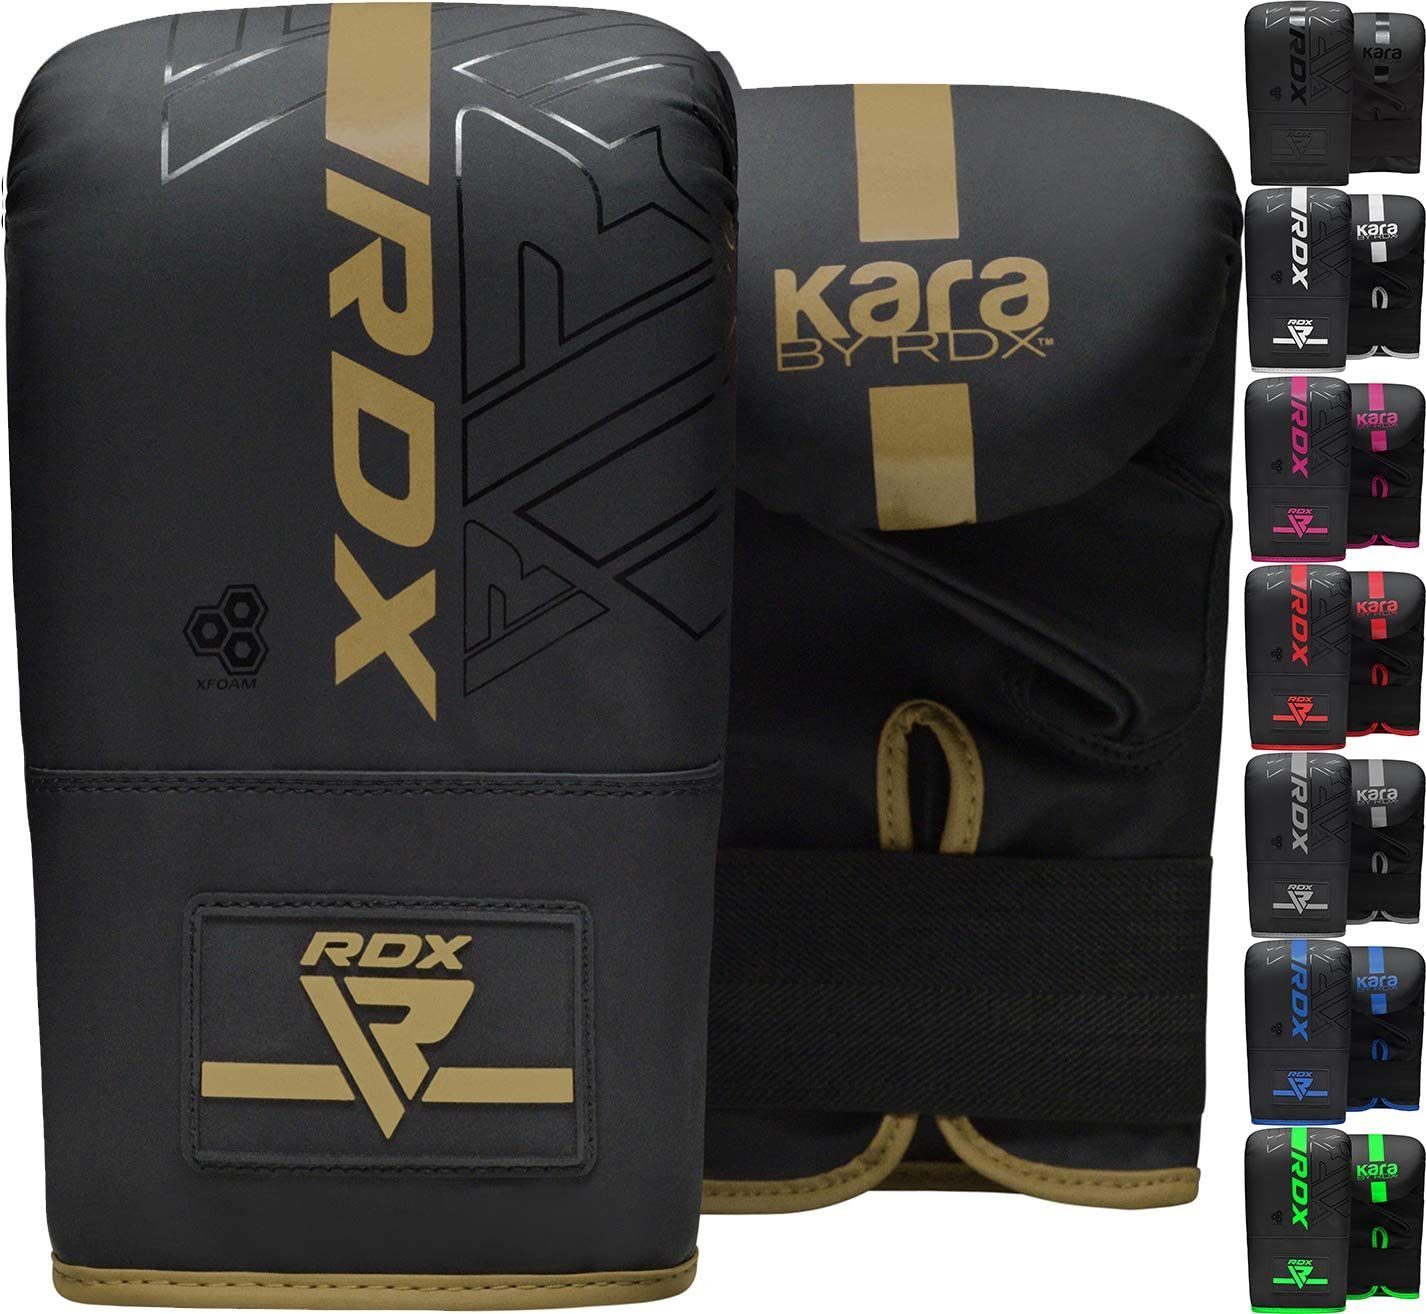 RDX Sports Sandsackhandschuhe RDX Boxsackhandschuhe für Martial Arts, Sparring, Boxen